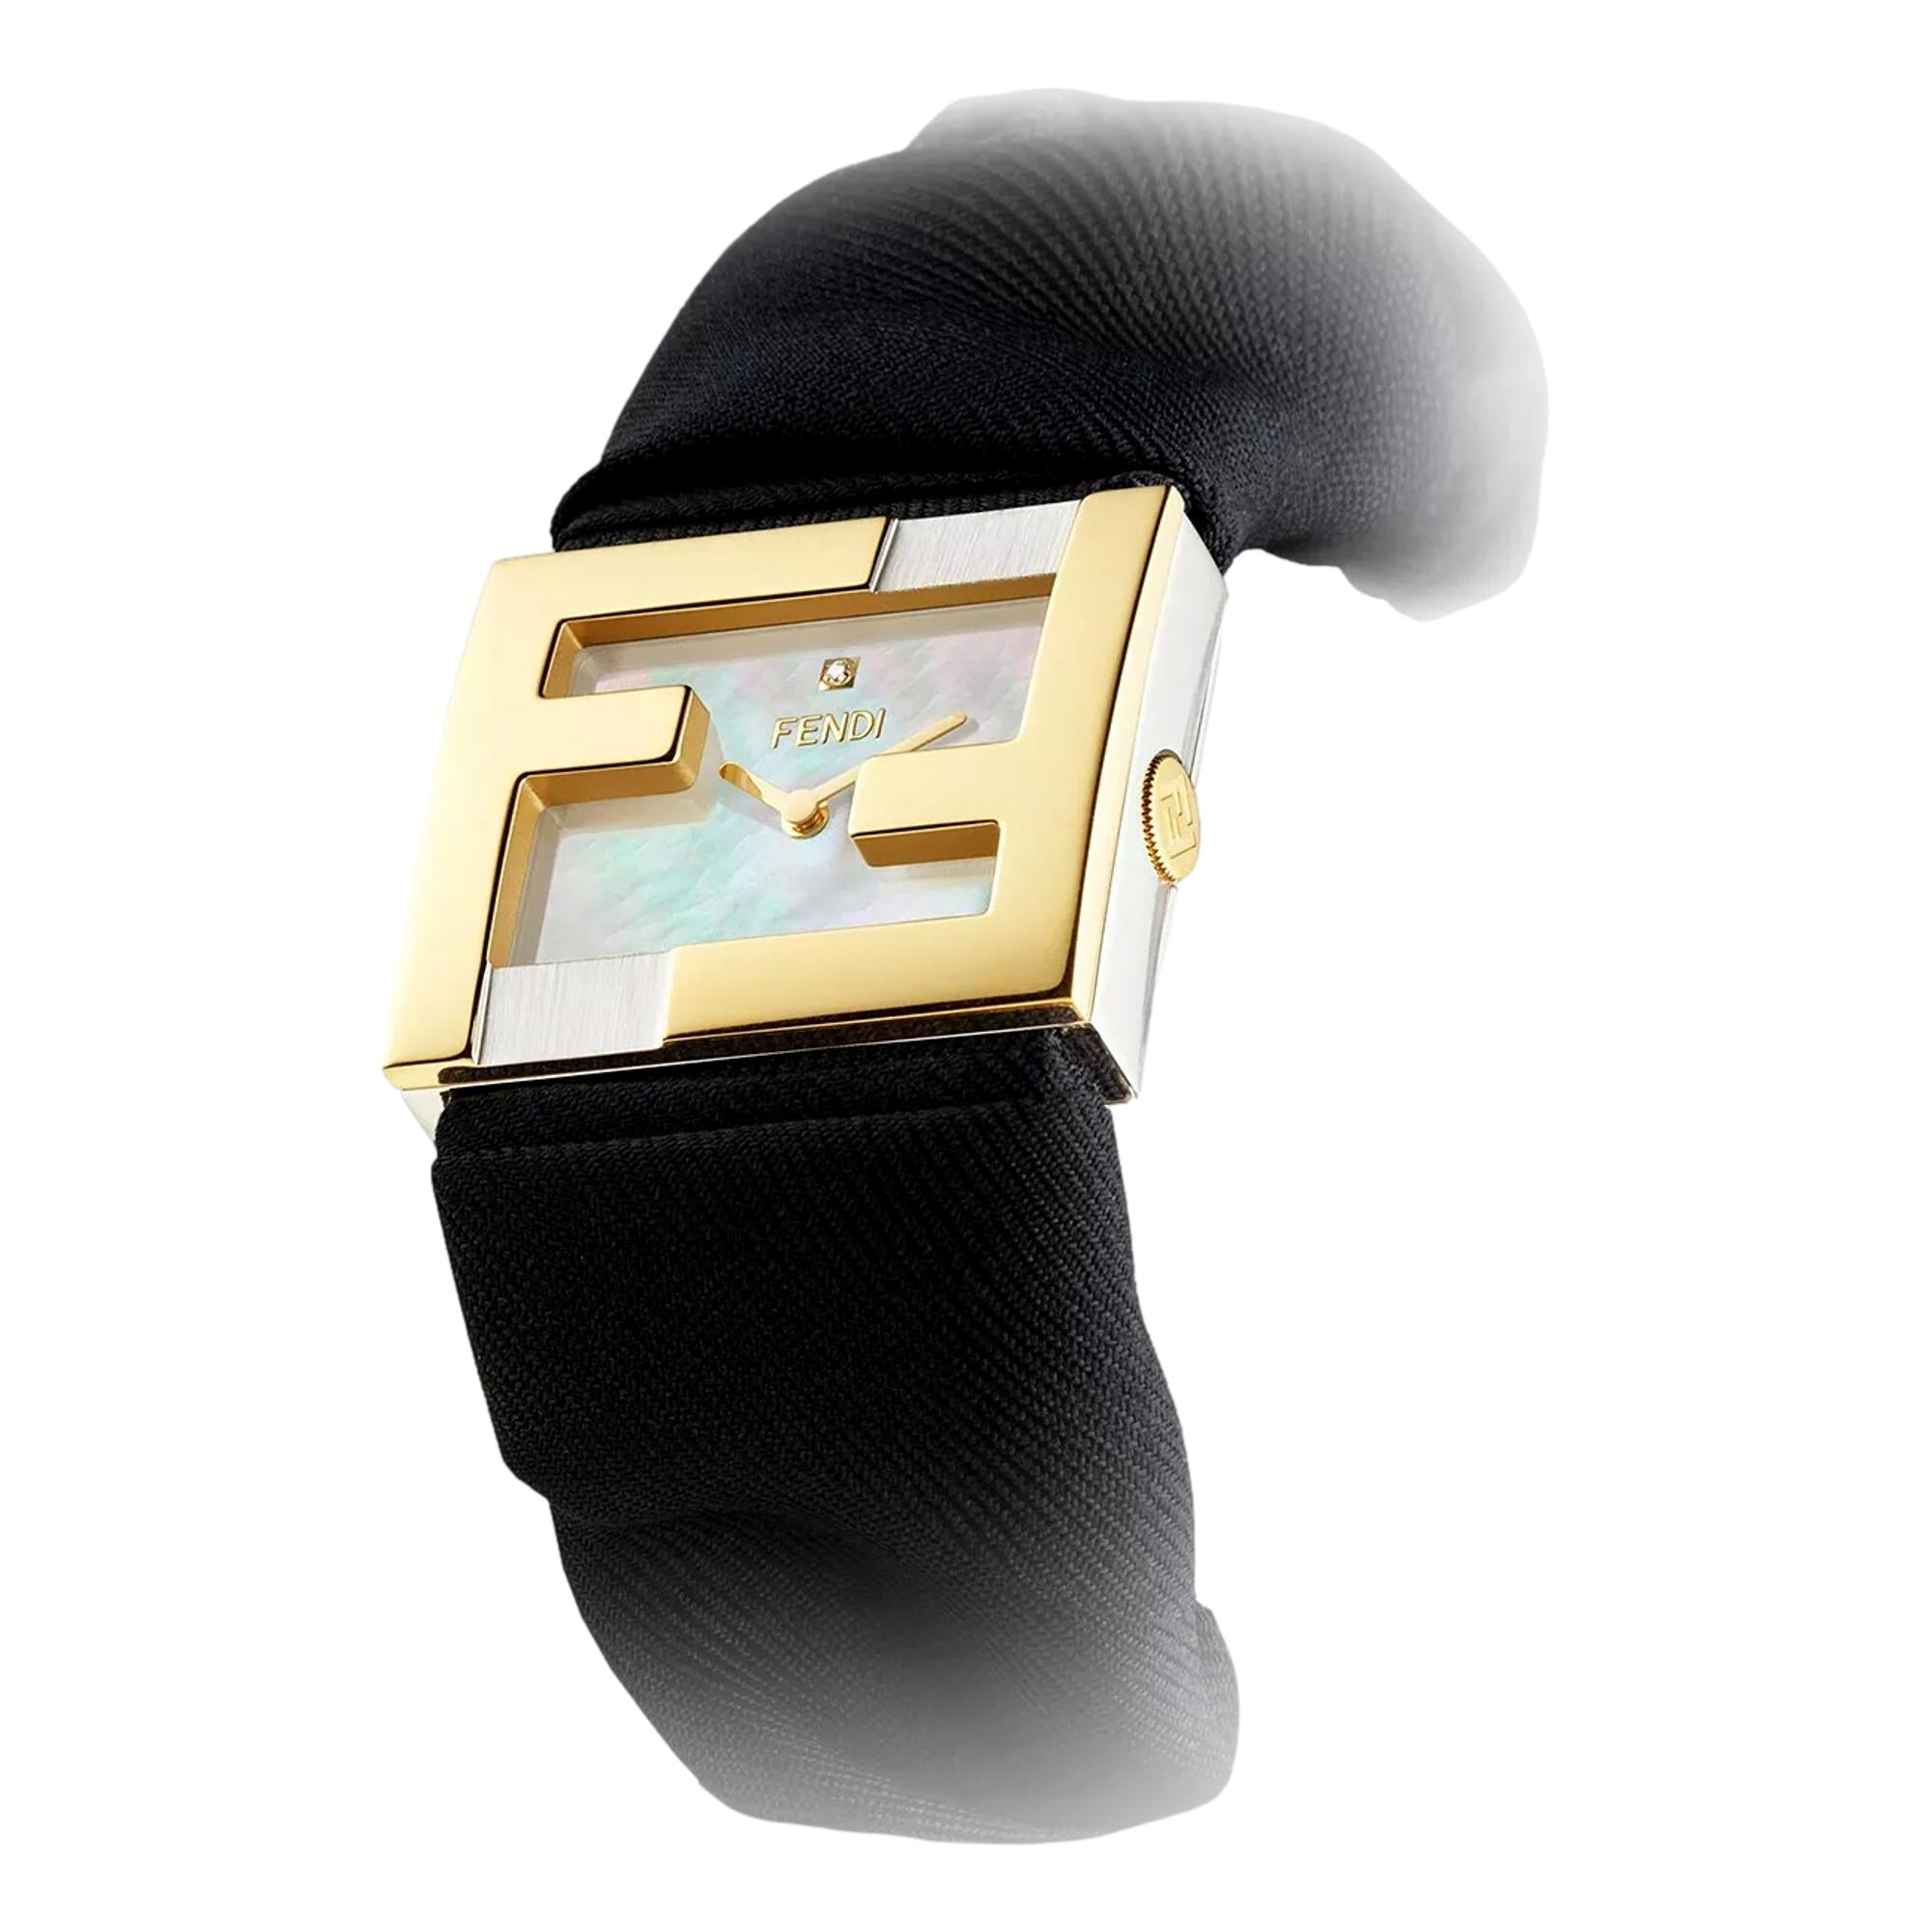 Fendi Fendimania Baguette Black Nylon Timepiece Watch - LUXURYMRKT